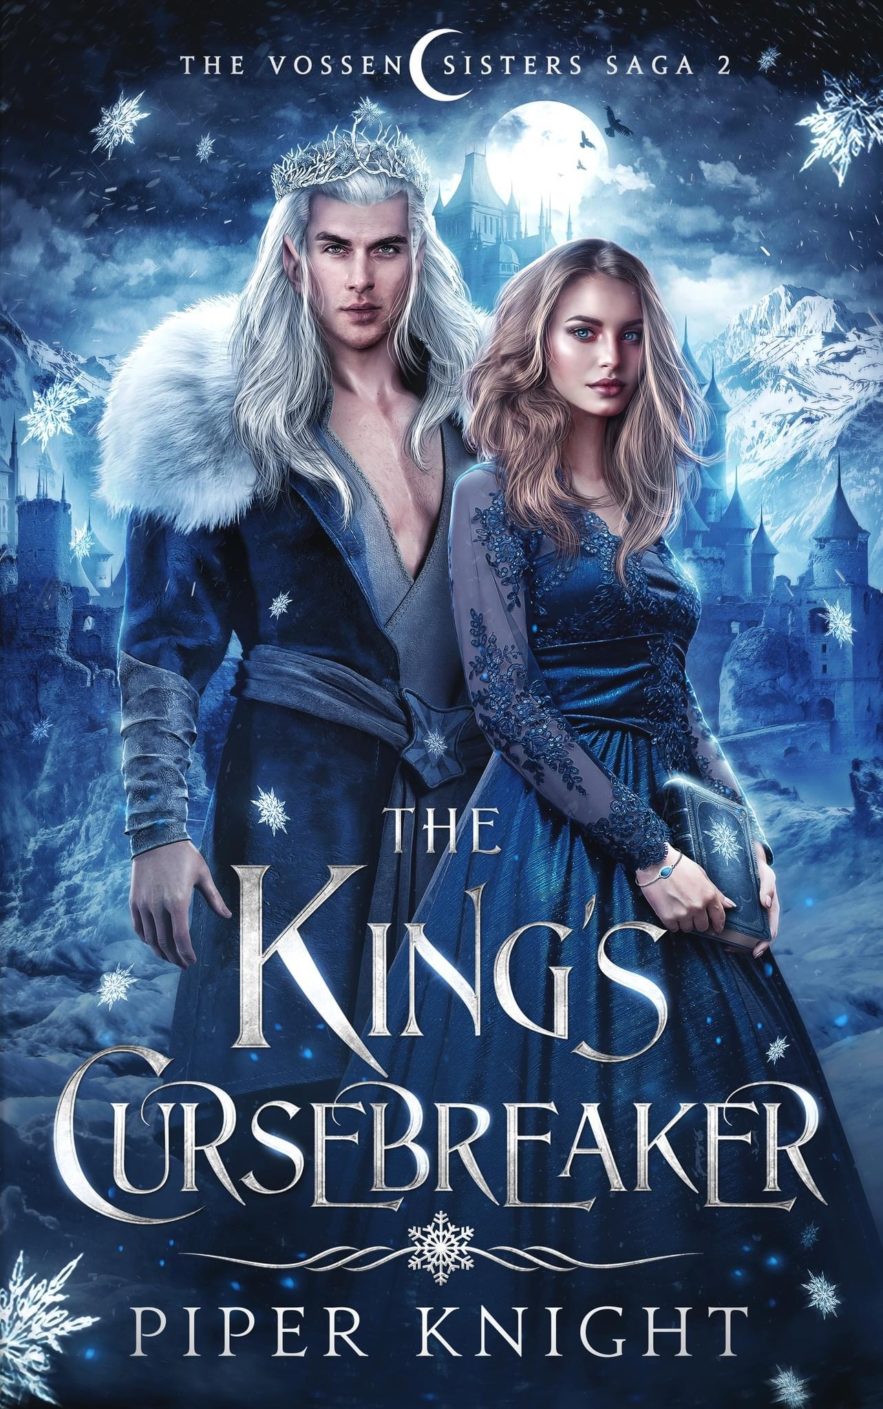 The King’s Cursebreaker Book Review